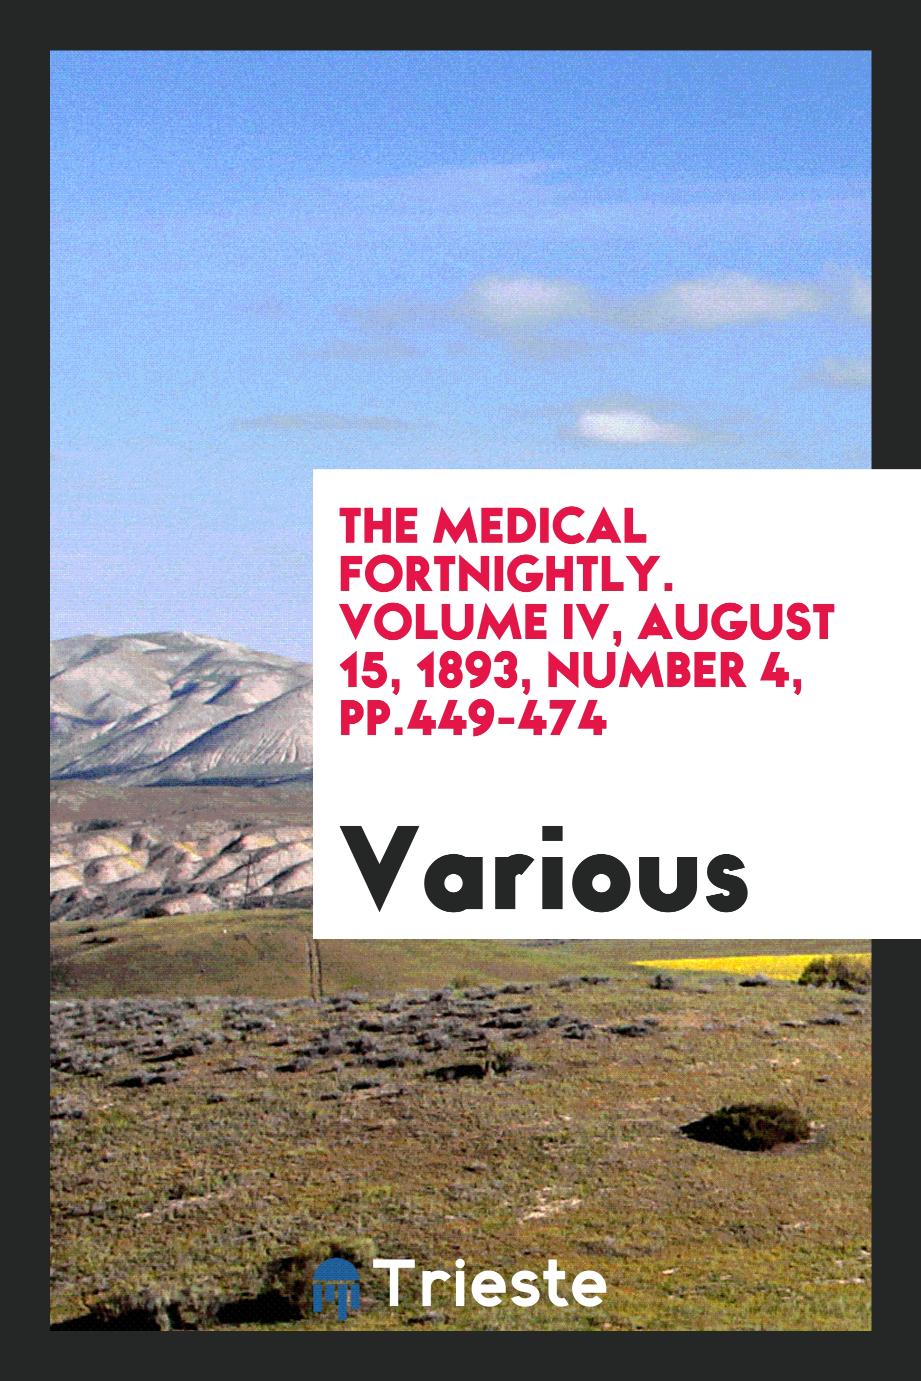 The Medical fortnightly. Volume IV, August 15, 1893, Number 4, pp.449-474